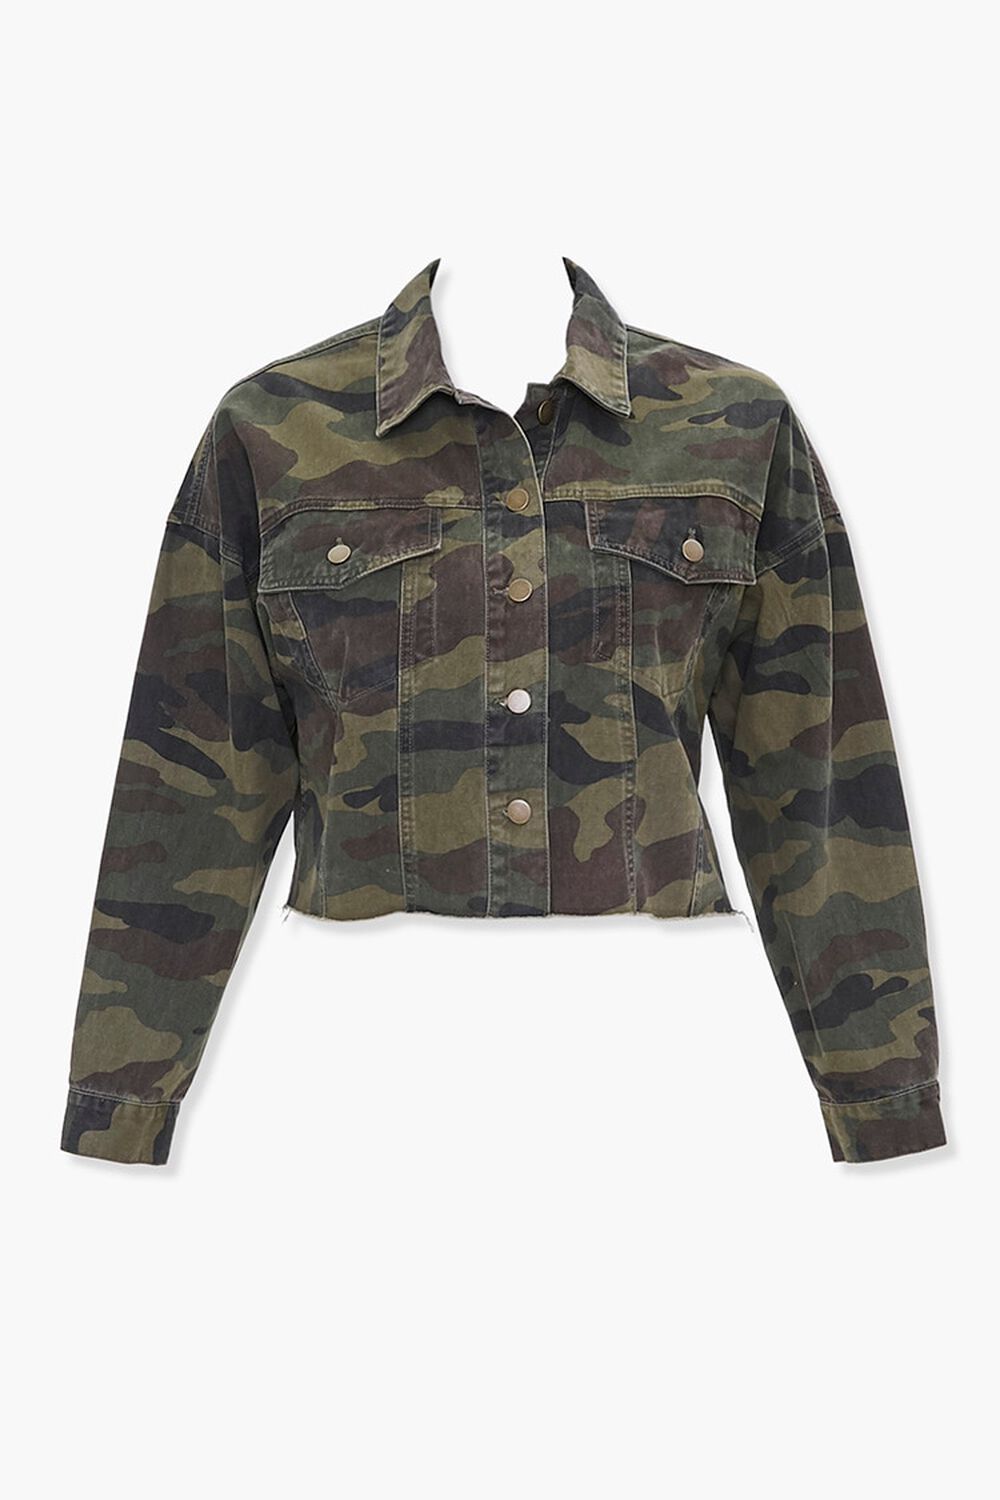 Frame Denim Regular Fit Camo Field Jacket, $197